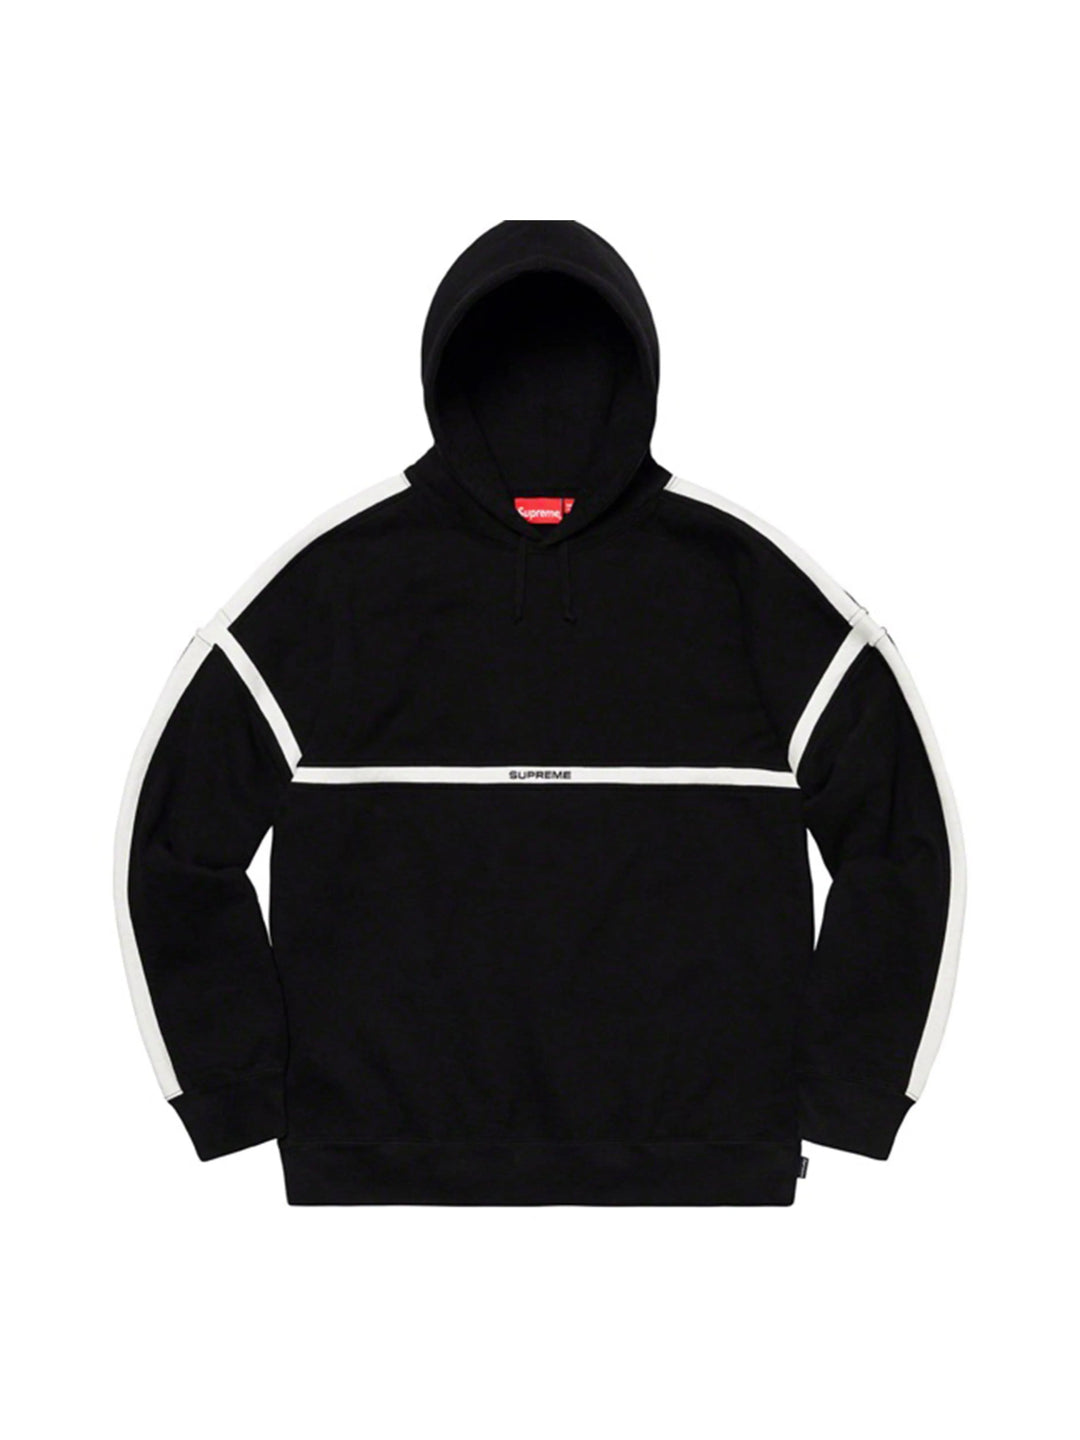 Supreme Warm Up Hooded Sweatshirt Black [SS20] Supreme